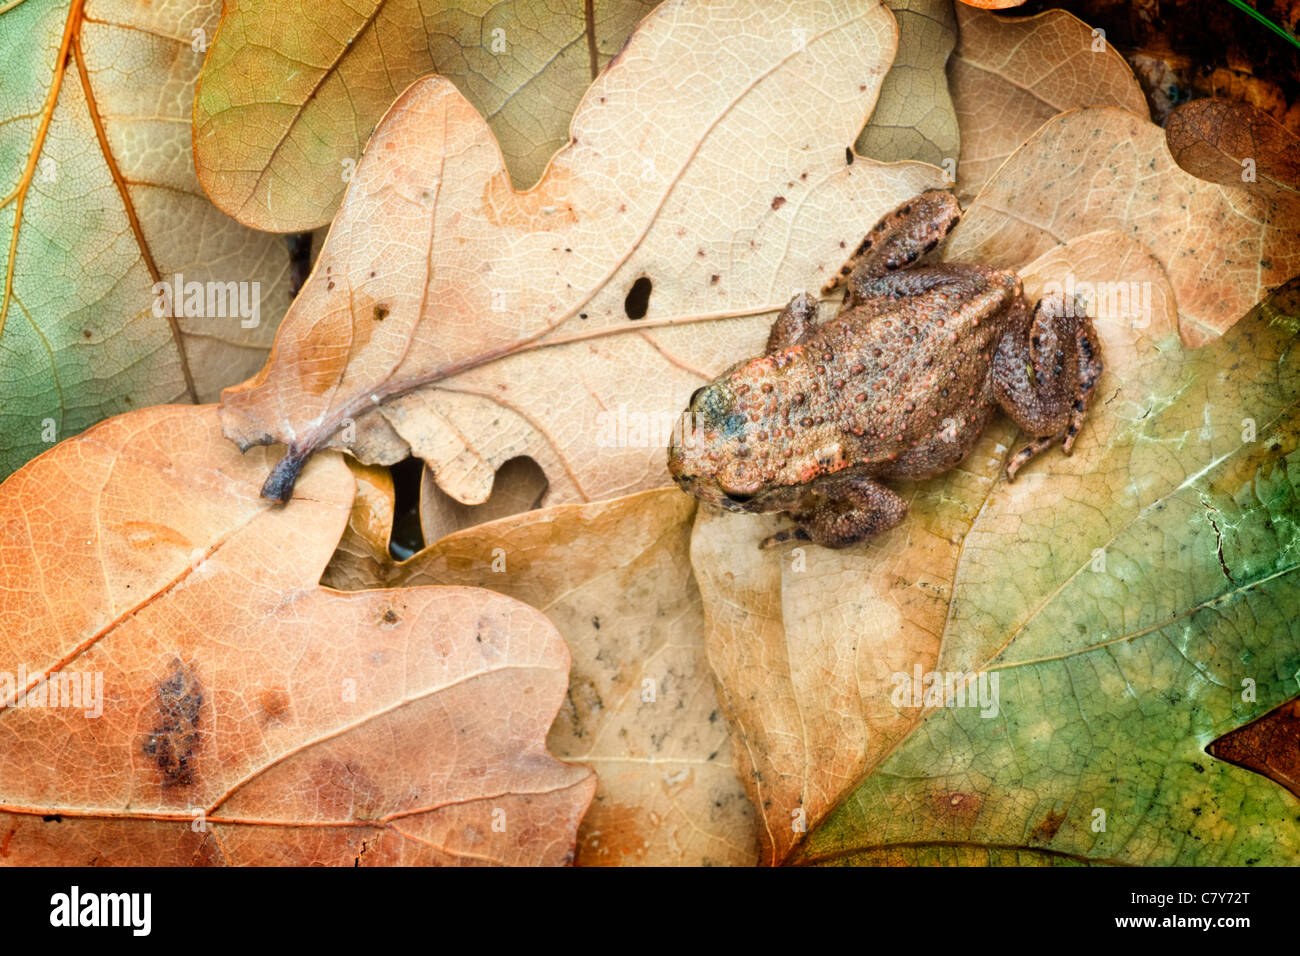 Juvenile common toad on fallen oak leaves Stock Photo